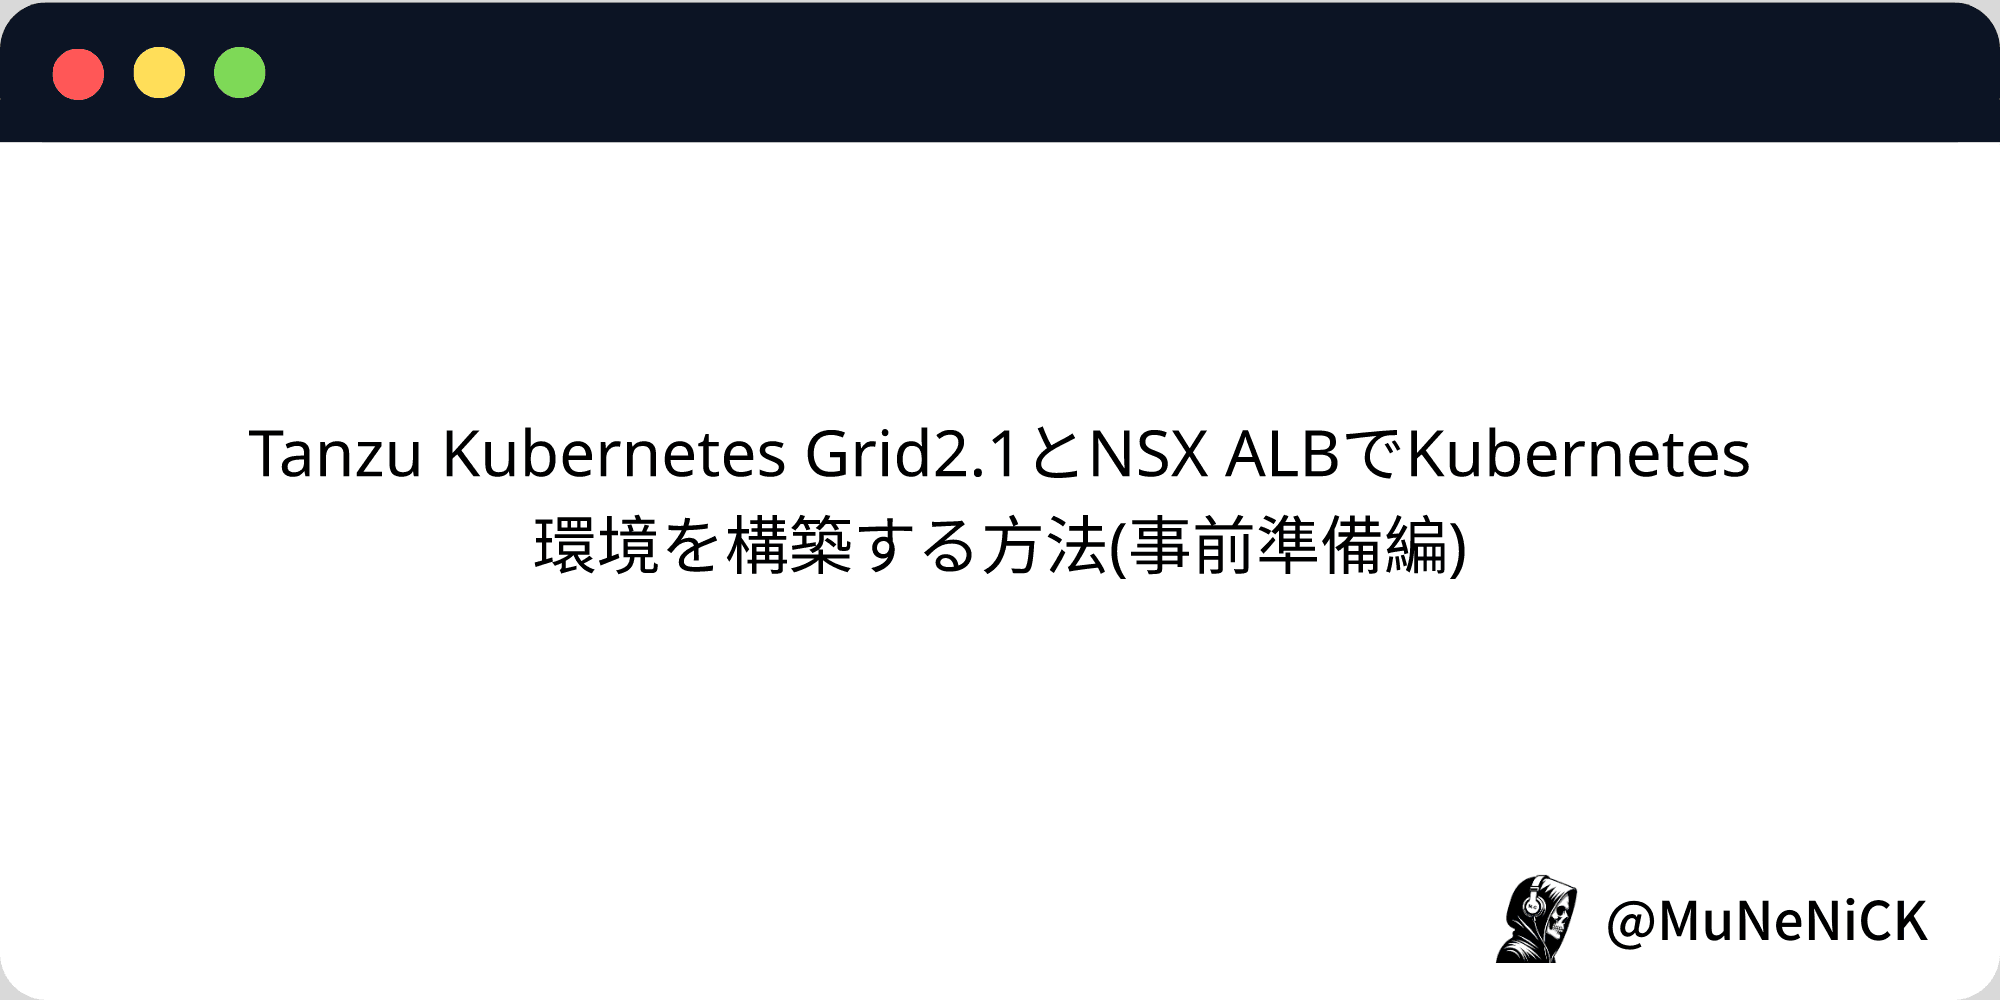 Cover Image for Tanzu Kubernetes Grid2.1とNSX ALBでKubernetes環境を構築する方法(事前準備編)